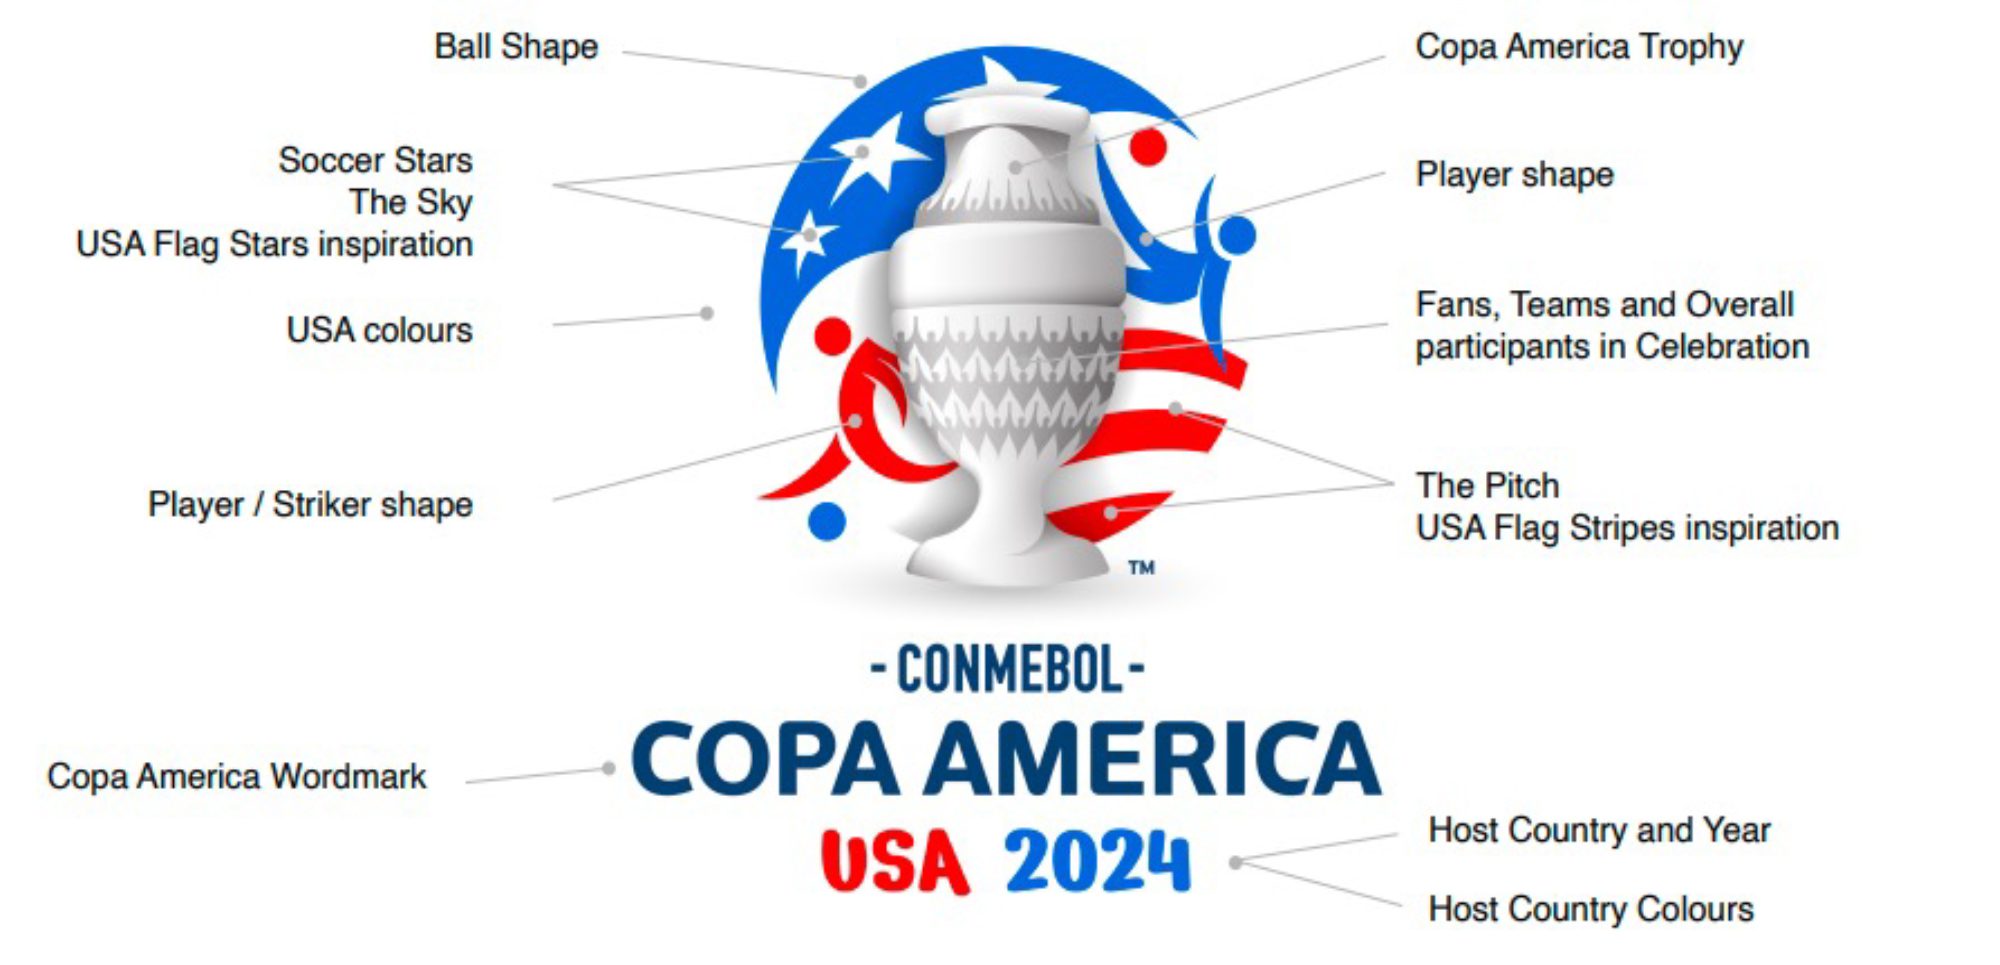 CONMEBOL Copa América 2024: Quarterfinal